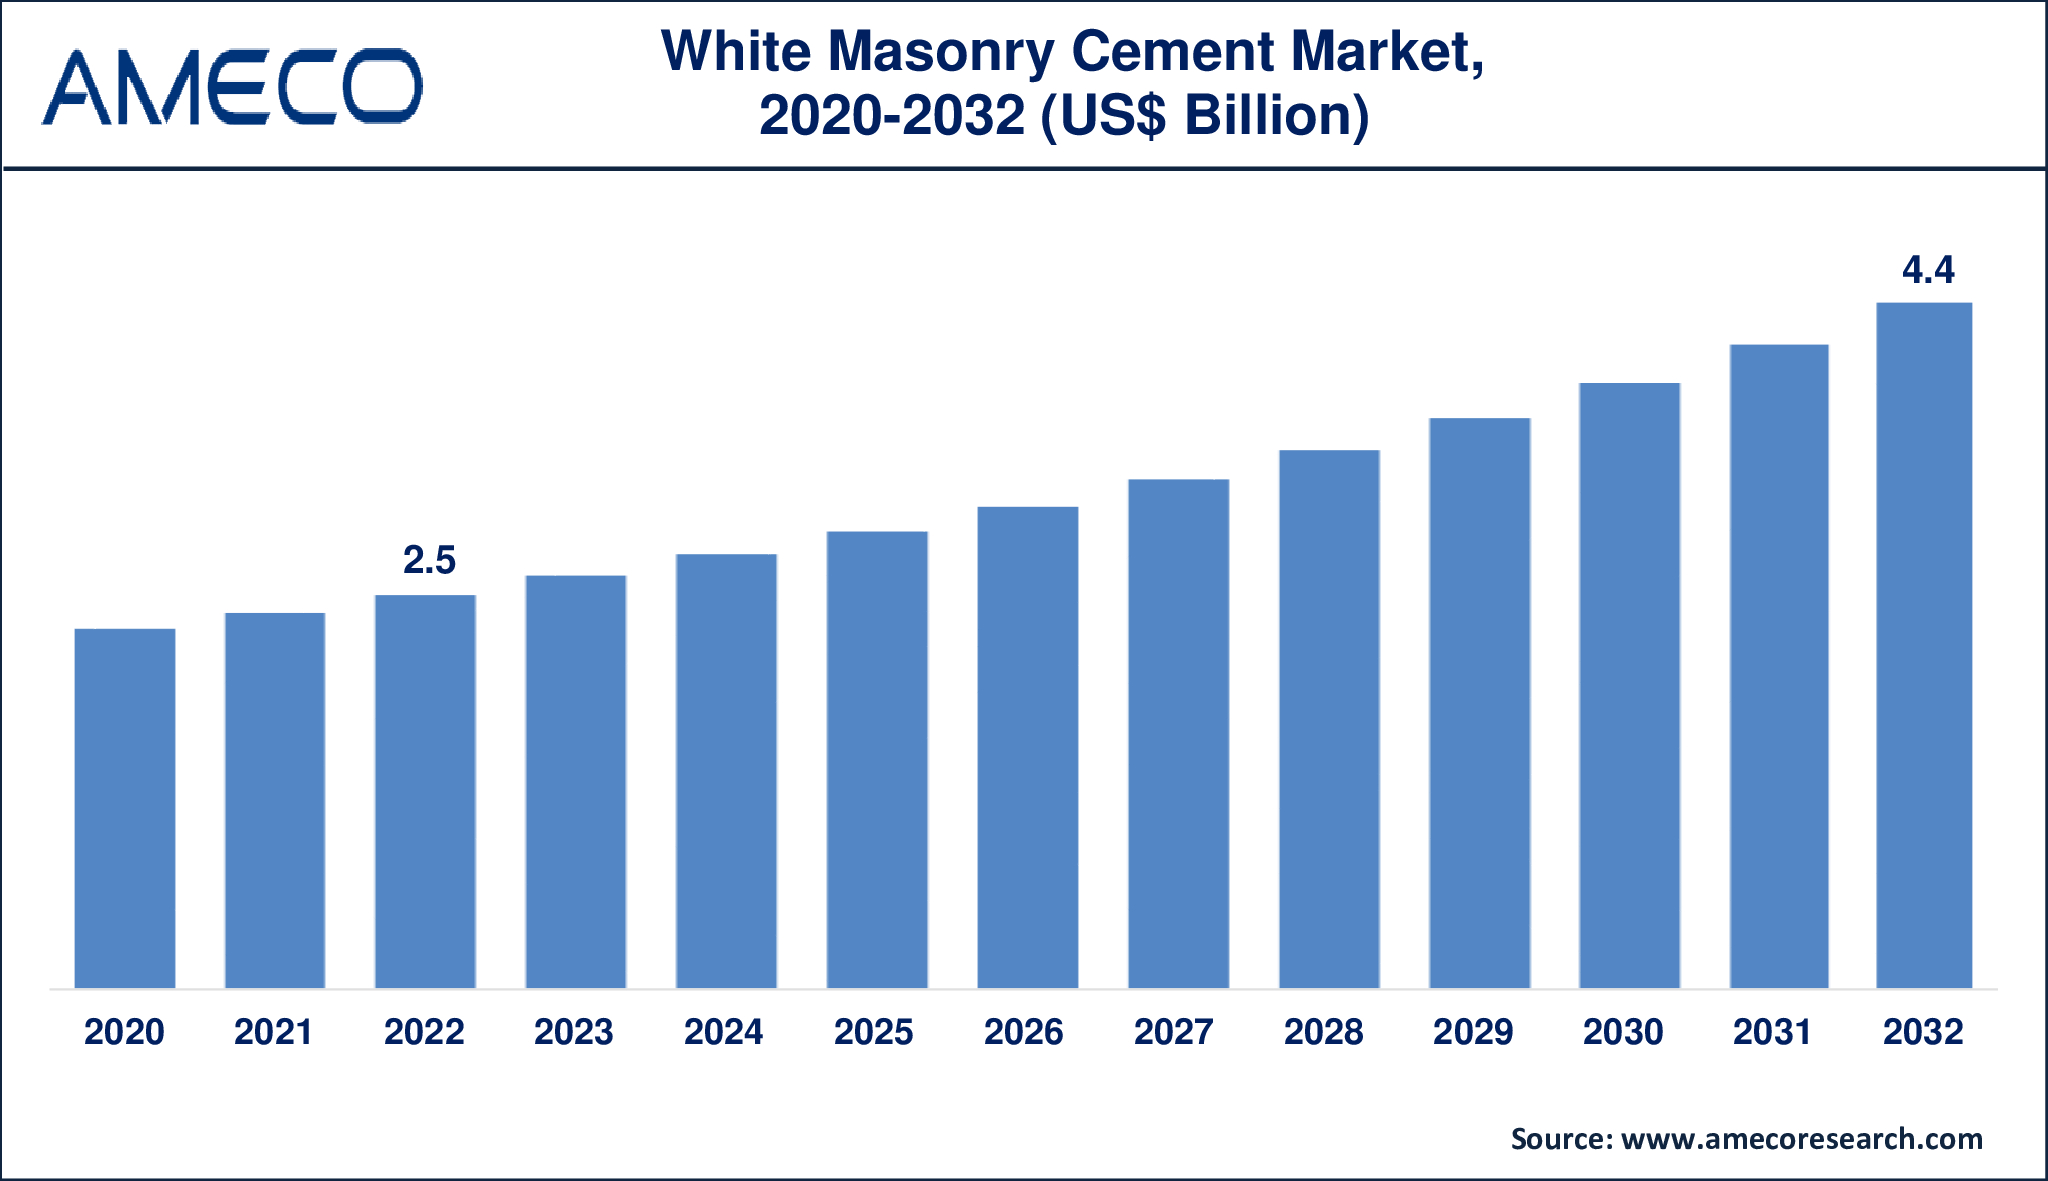 White Masonry Cement Market Dynamics